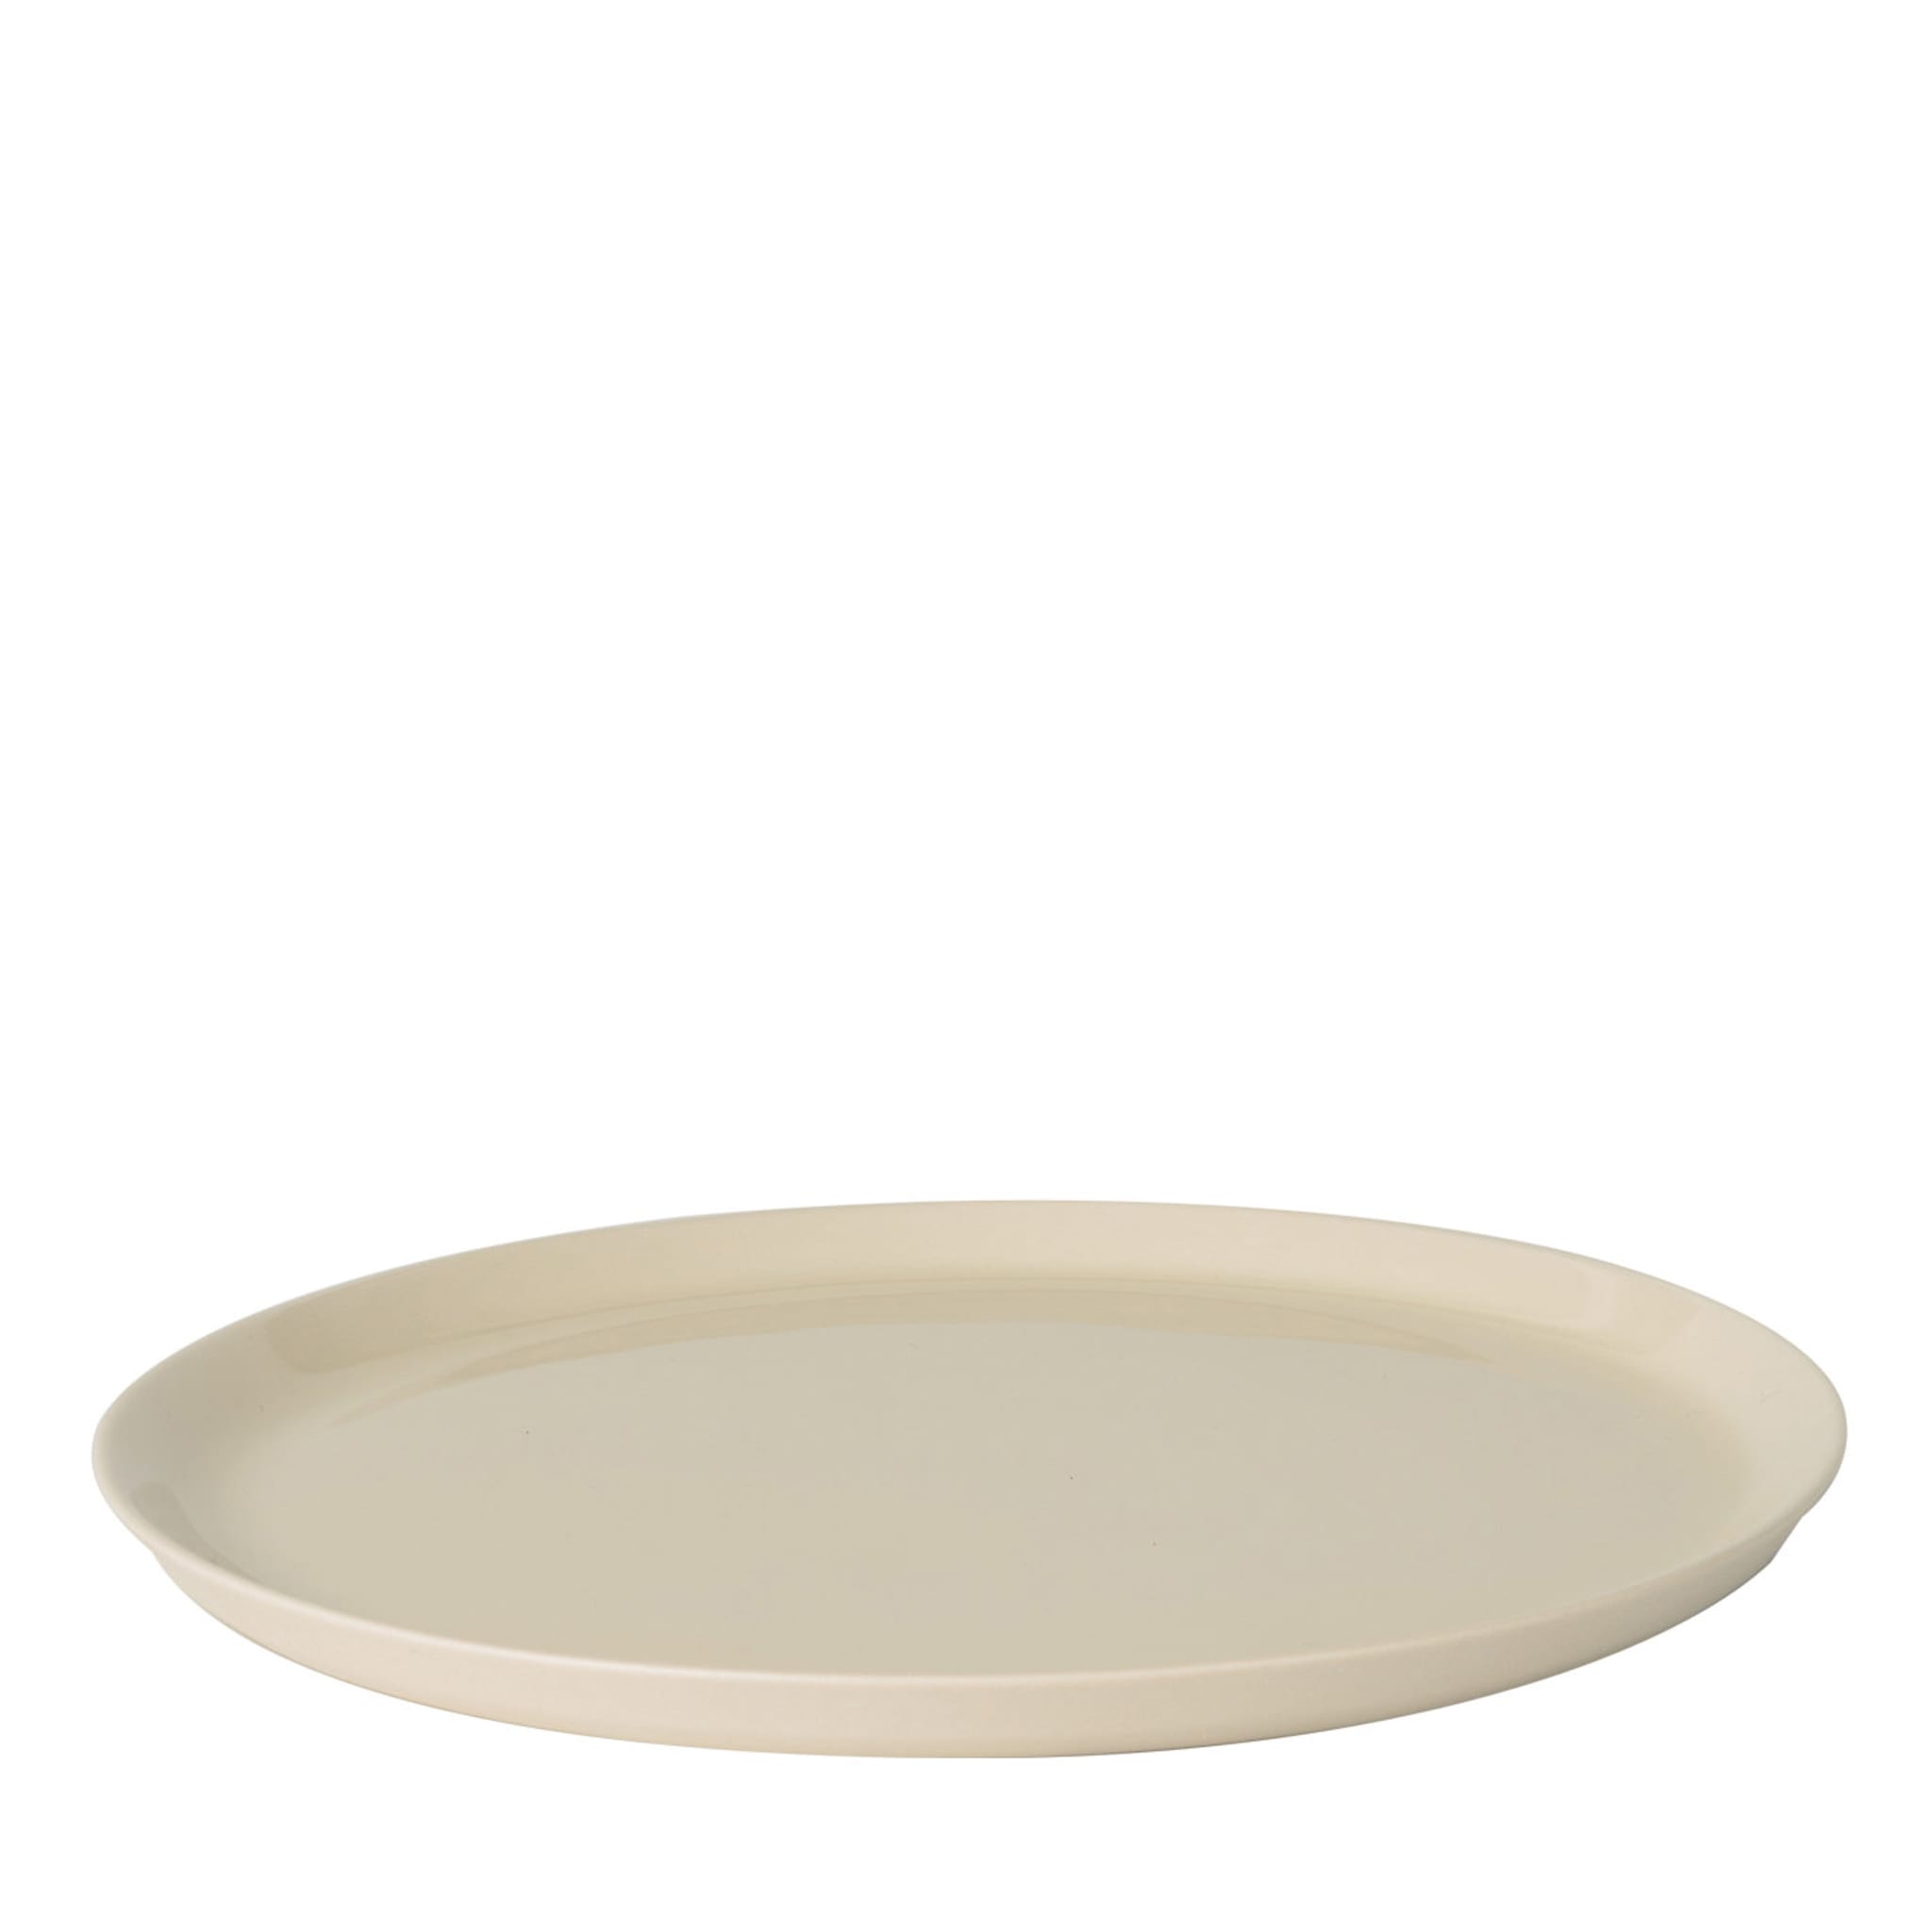 Set of 4 White Ceramic Dinner Plates - Main view